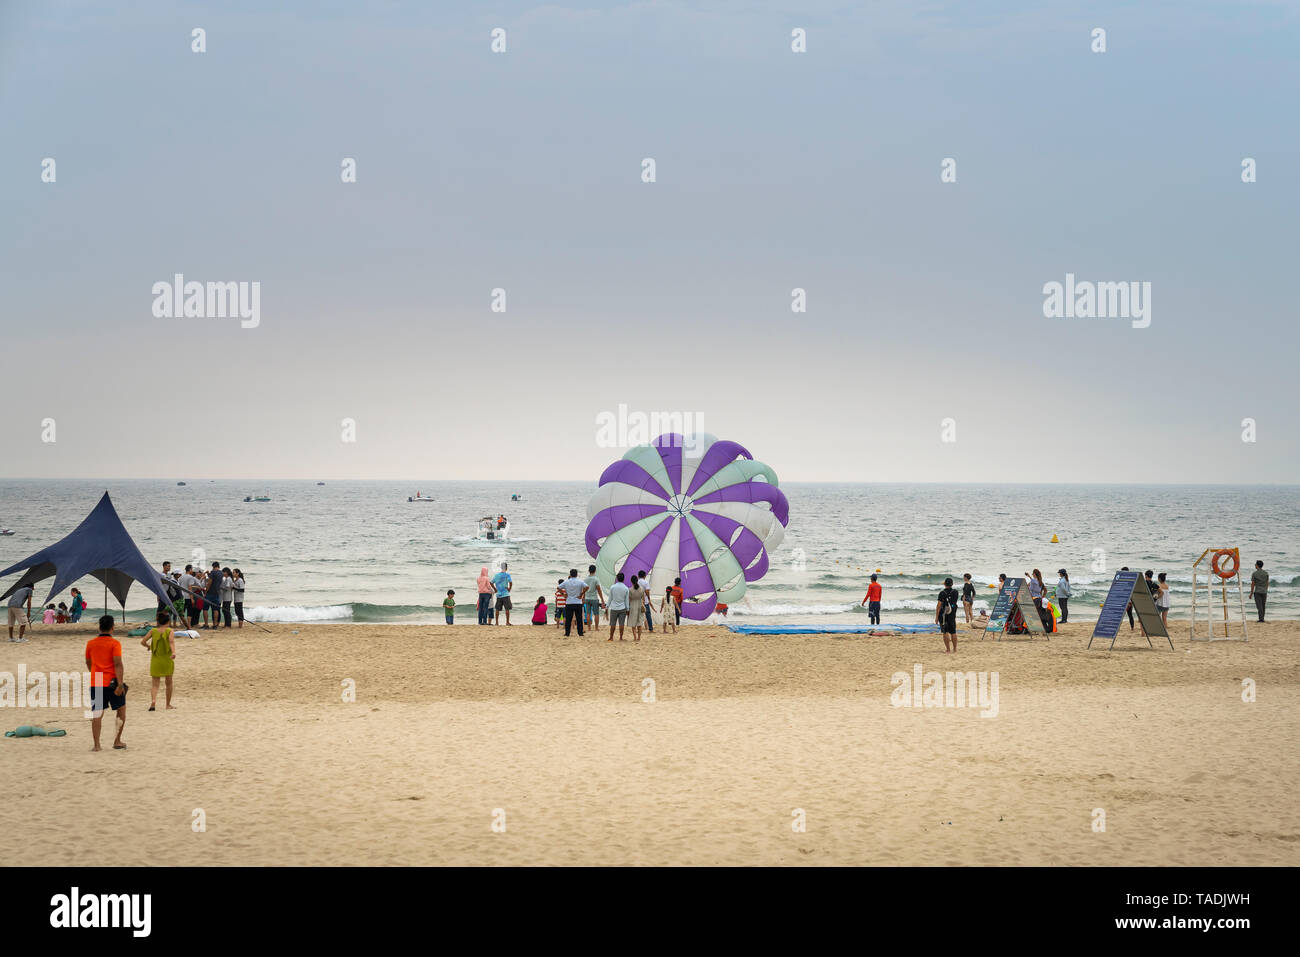 My Khe beach, Da Nang city, Vietnam - April 28, 2019: Parasailing at My Khe beach in Da Nang city. Popular entertainment for holiday travelers Stock Photo